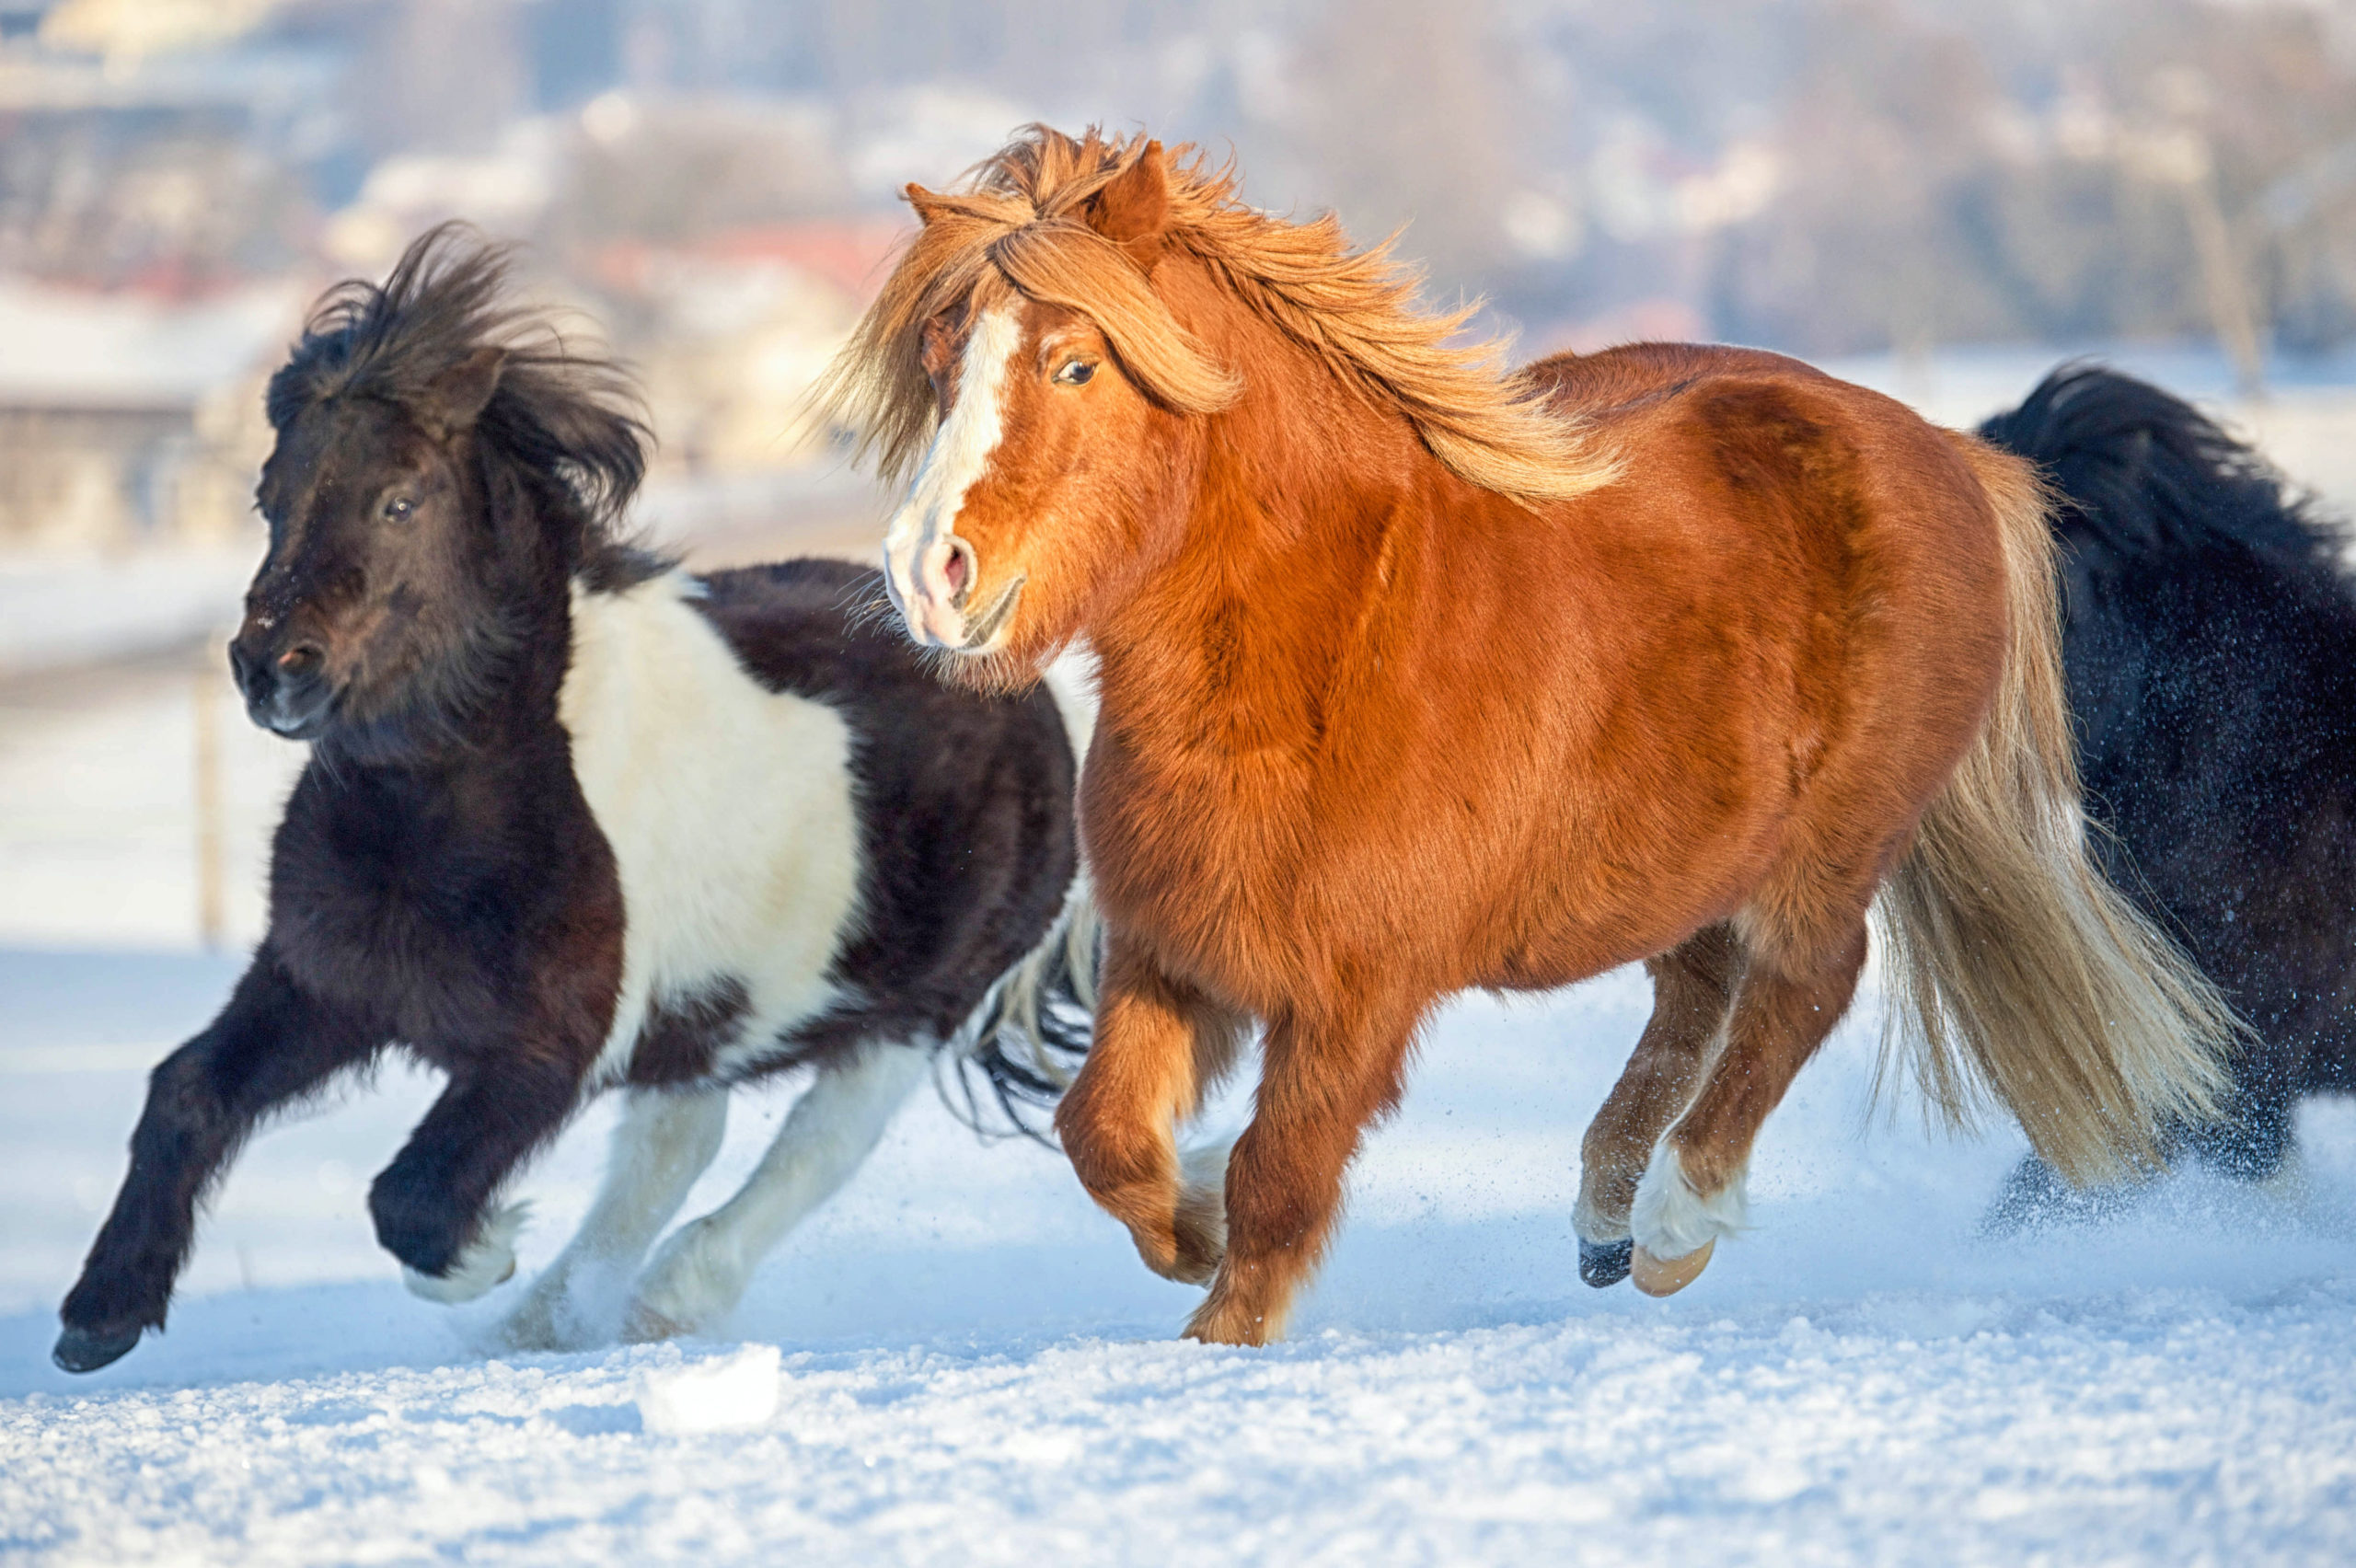 Pair of shetland ponies run through the snow.